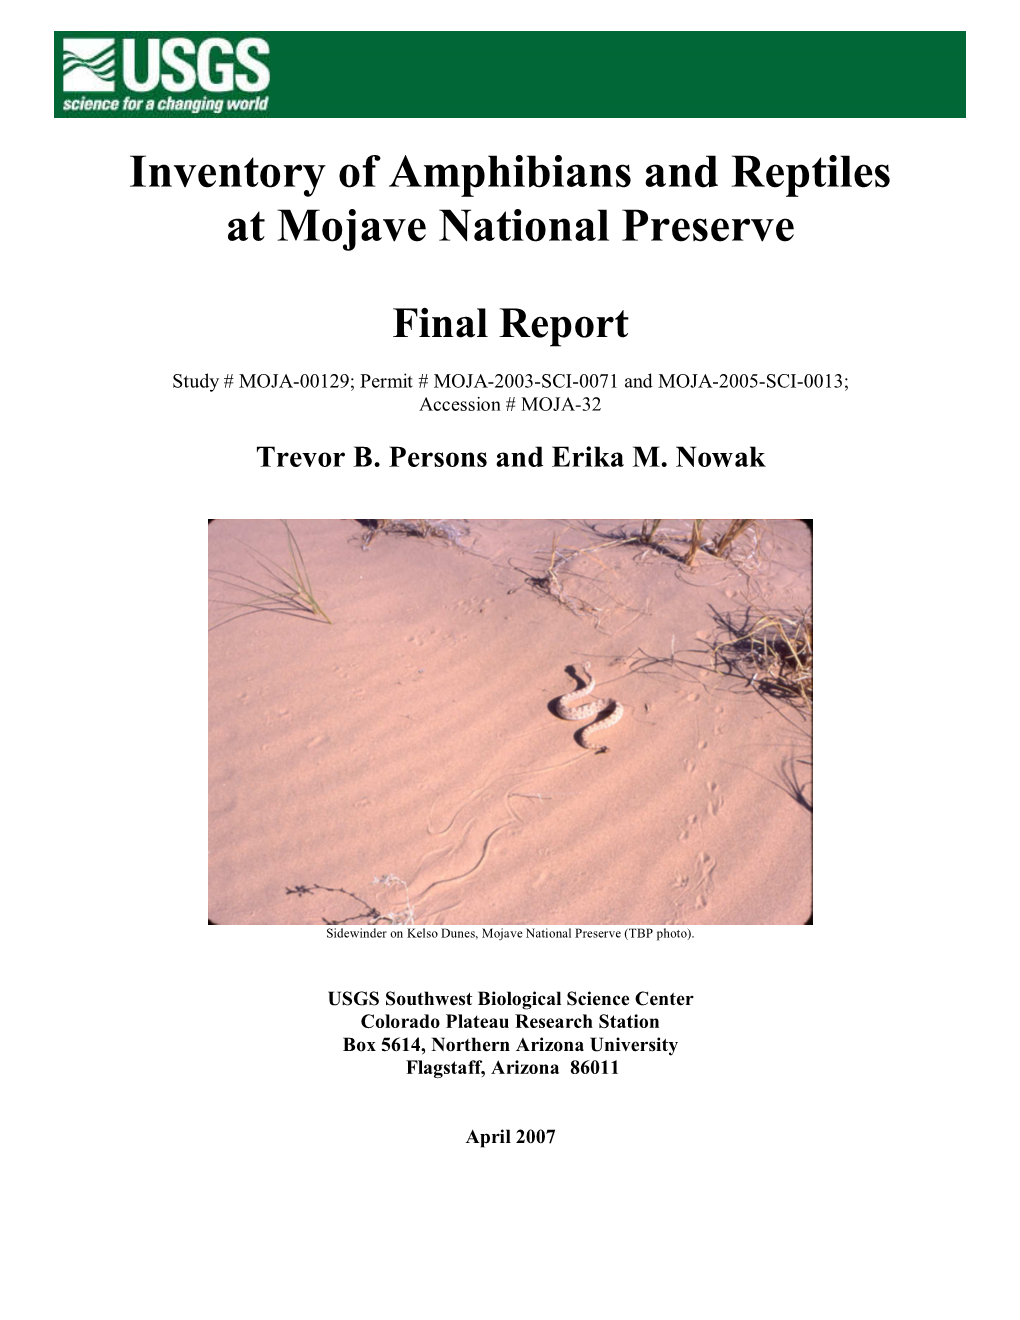 Mojave Preserve Herps Final Report April 2007